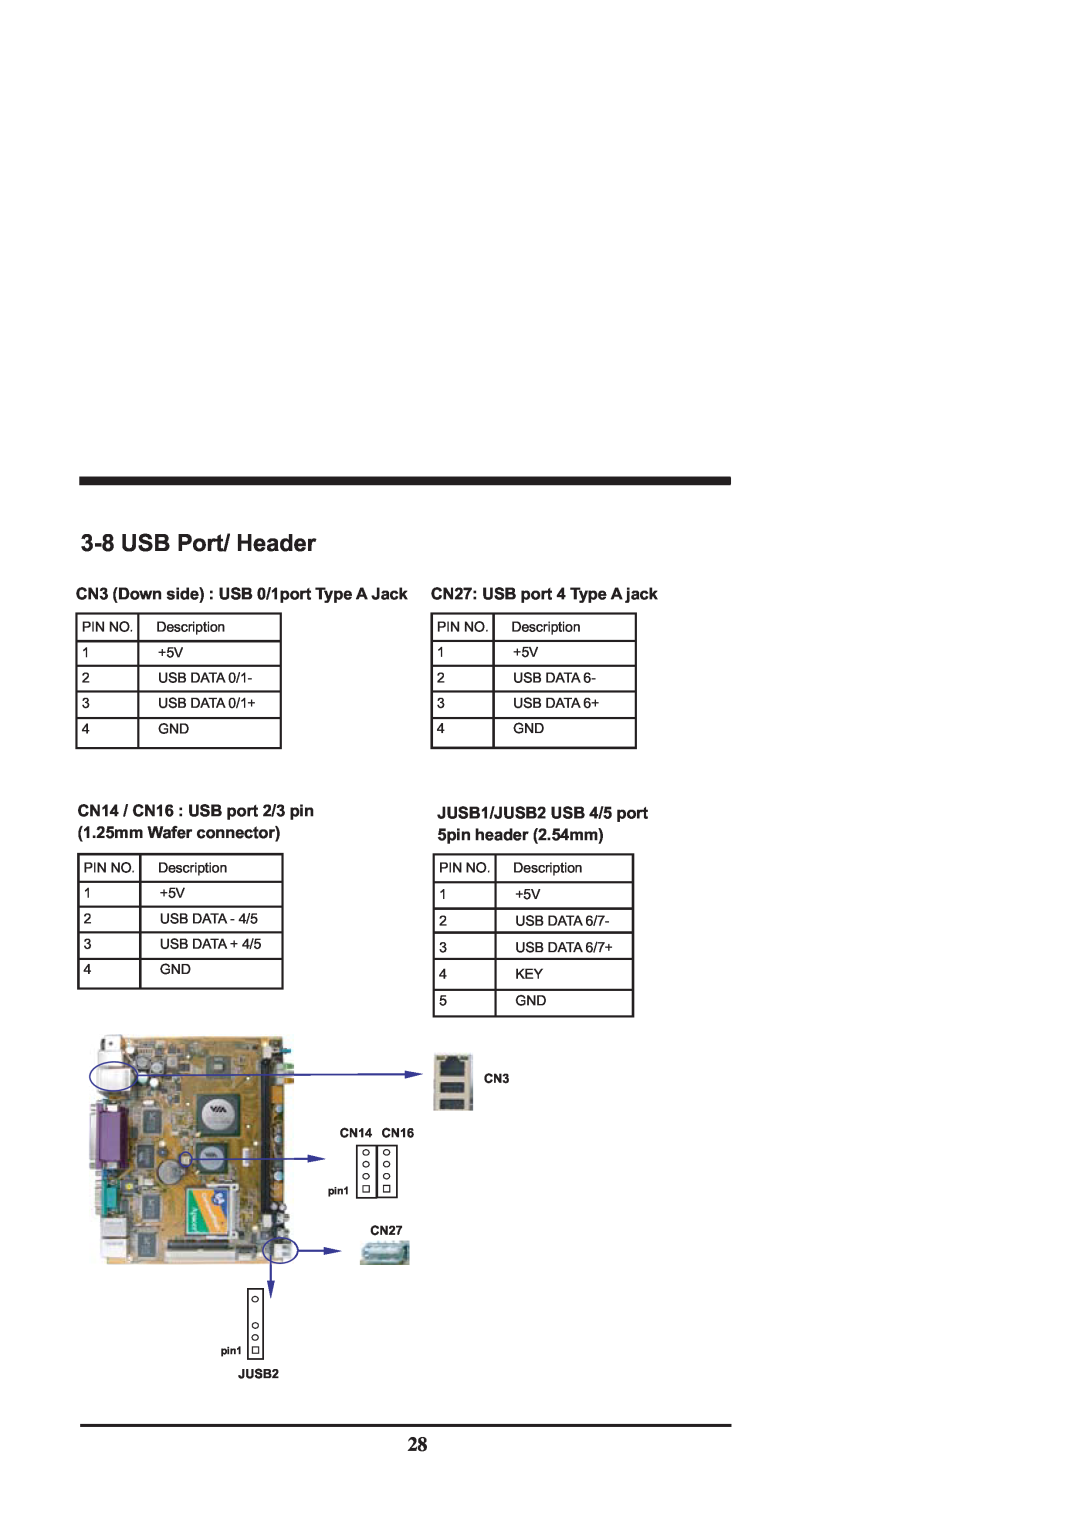 Intel CV700A manual 3-8USB Port/ Header, CN14 / CN16 : USB port 2/3 pin, JUSB1/JUSB2 USB 4/5 port, 1.25mm Wafer connector 